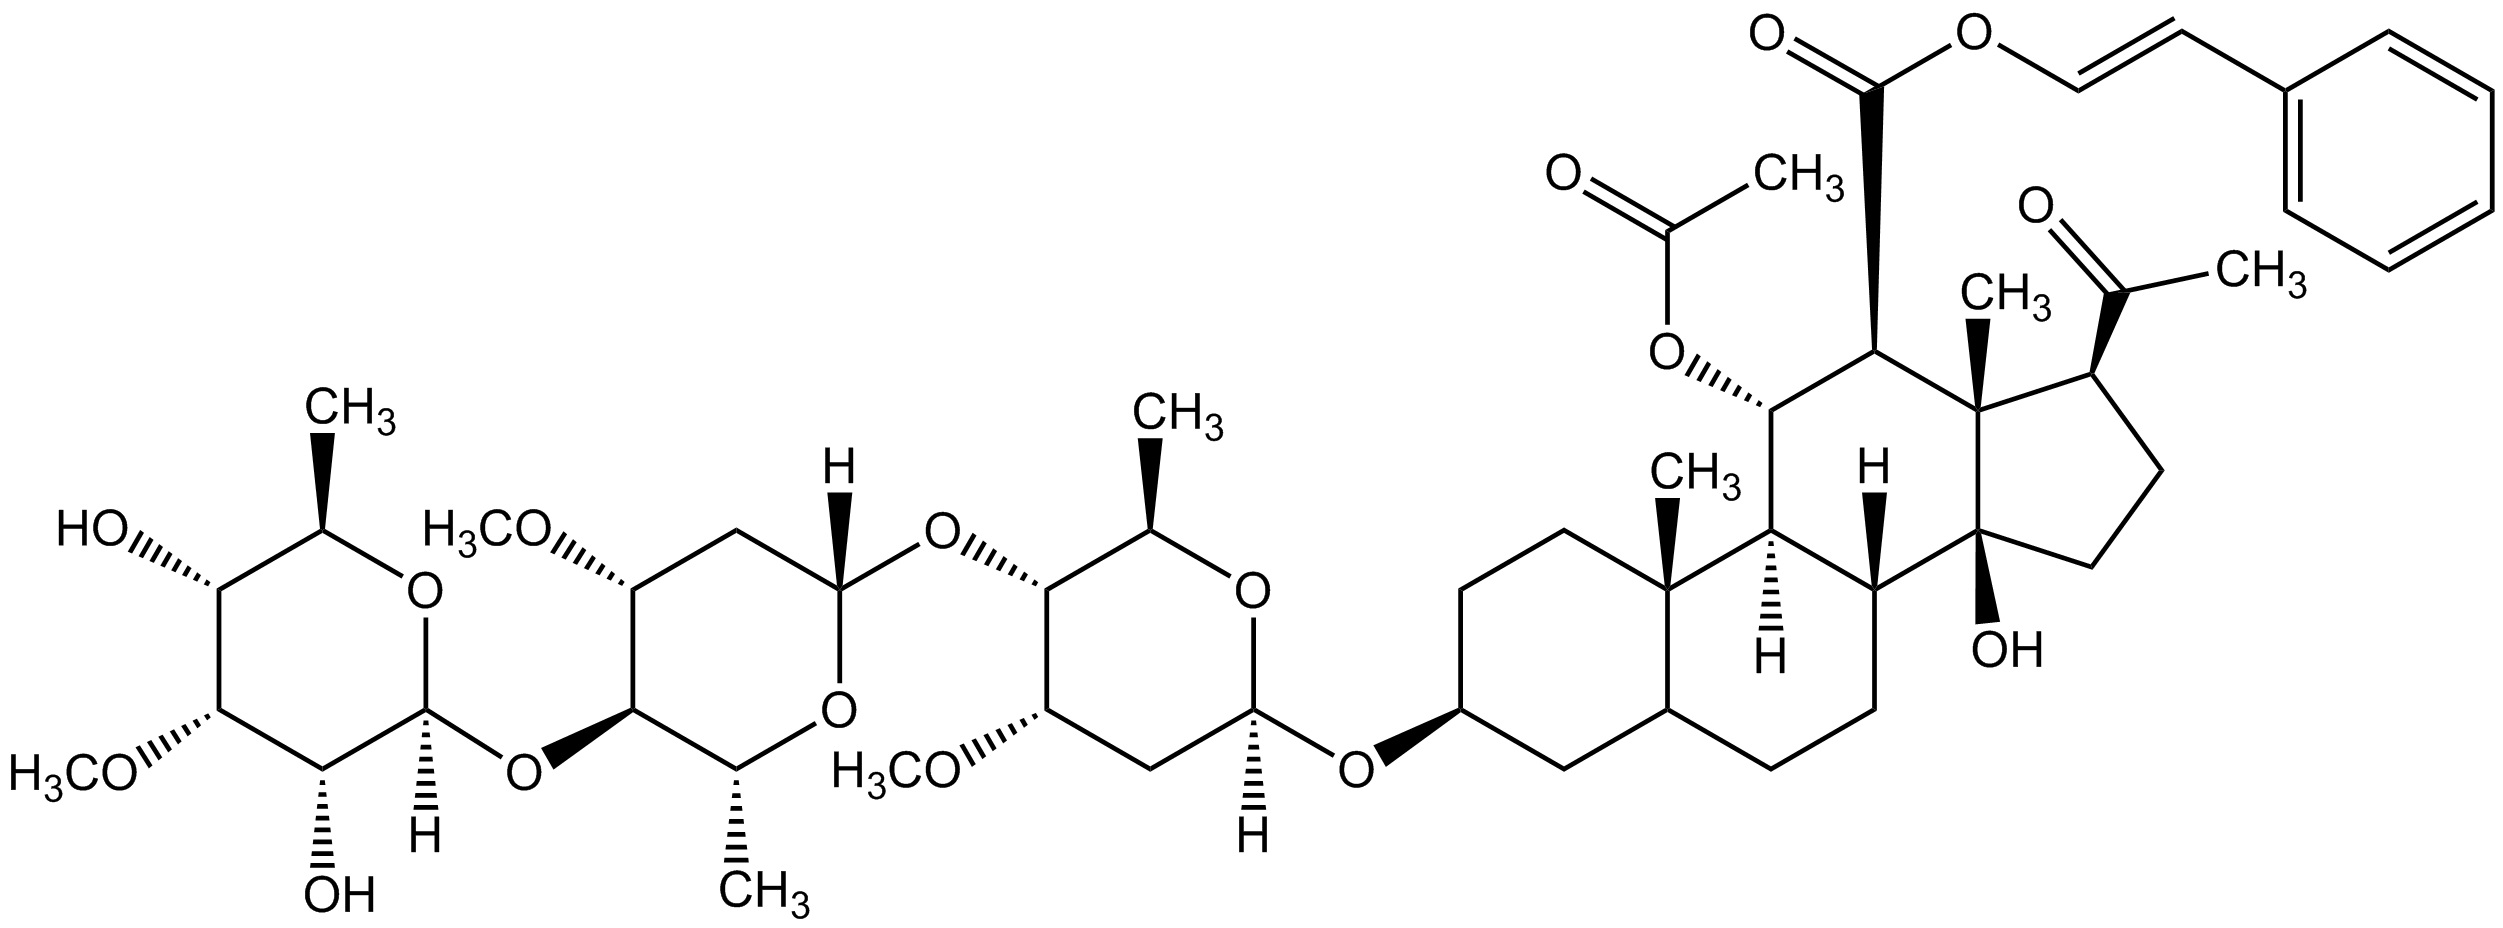 Condurangoglykosid A phyproof® Referenzsubstanz | PhytoLab